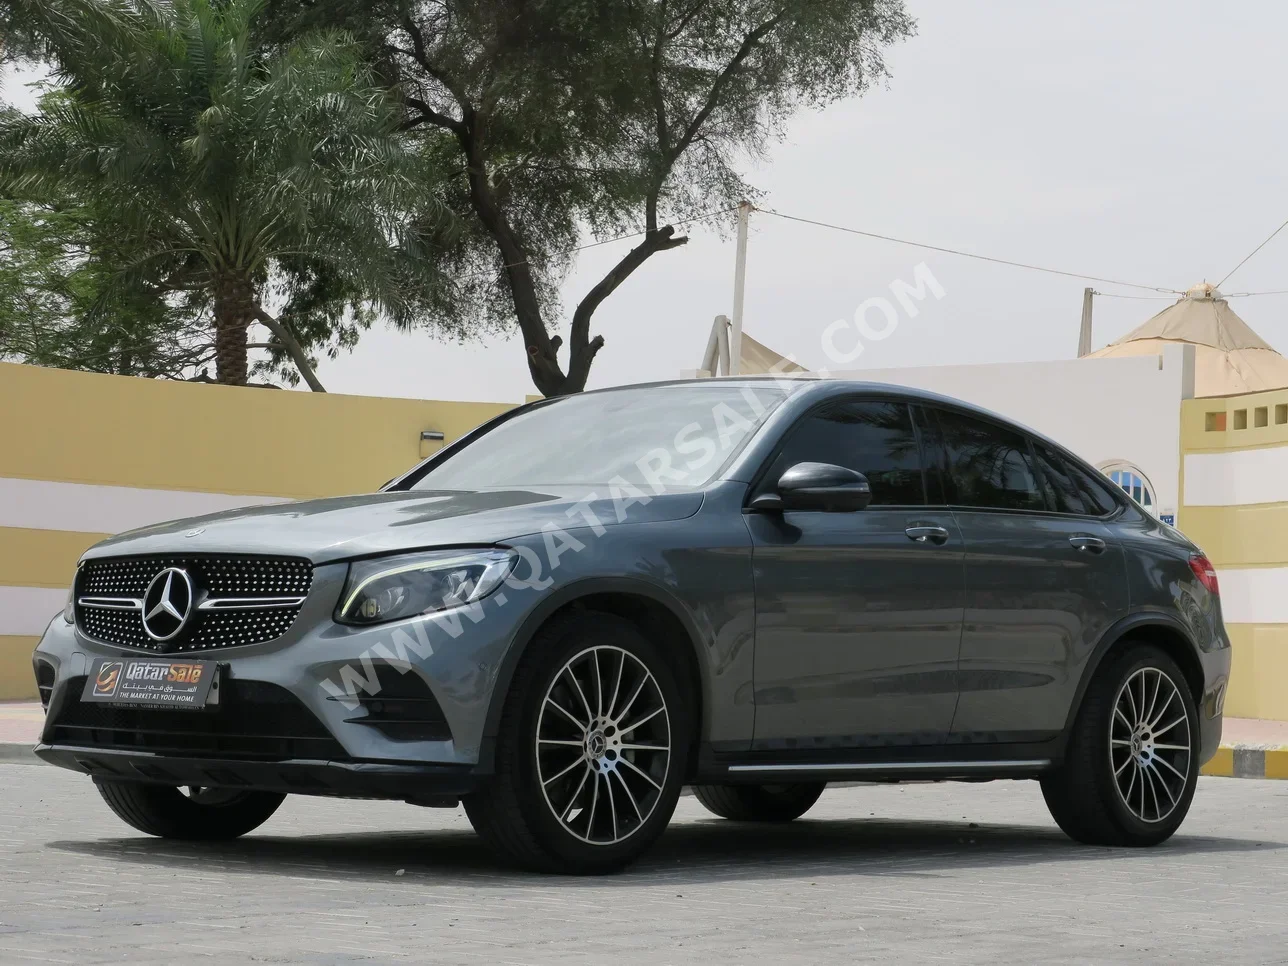  Mercedes-Benz  GLC  250  2019  Automatic  70,000 Km  4 Cylinder  All Wheel Drive (AWD)  SUV  Gray  With Warranty